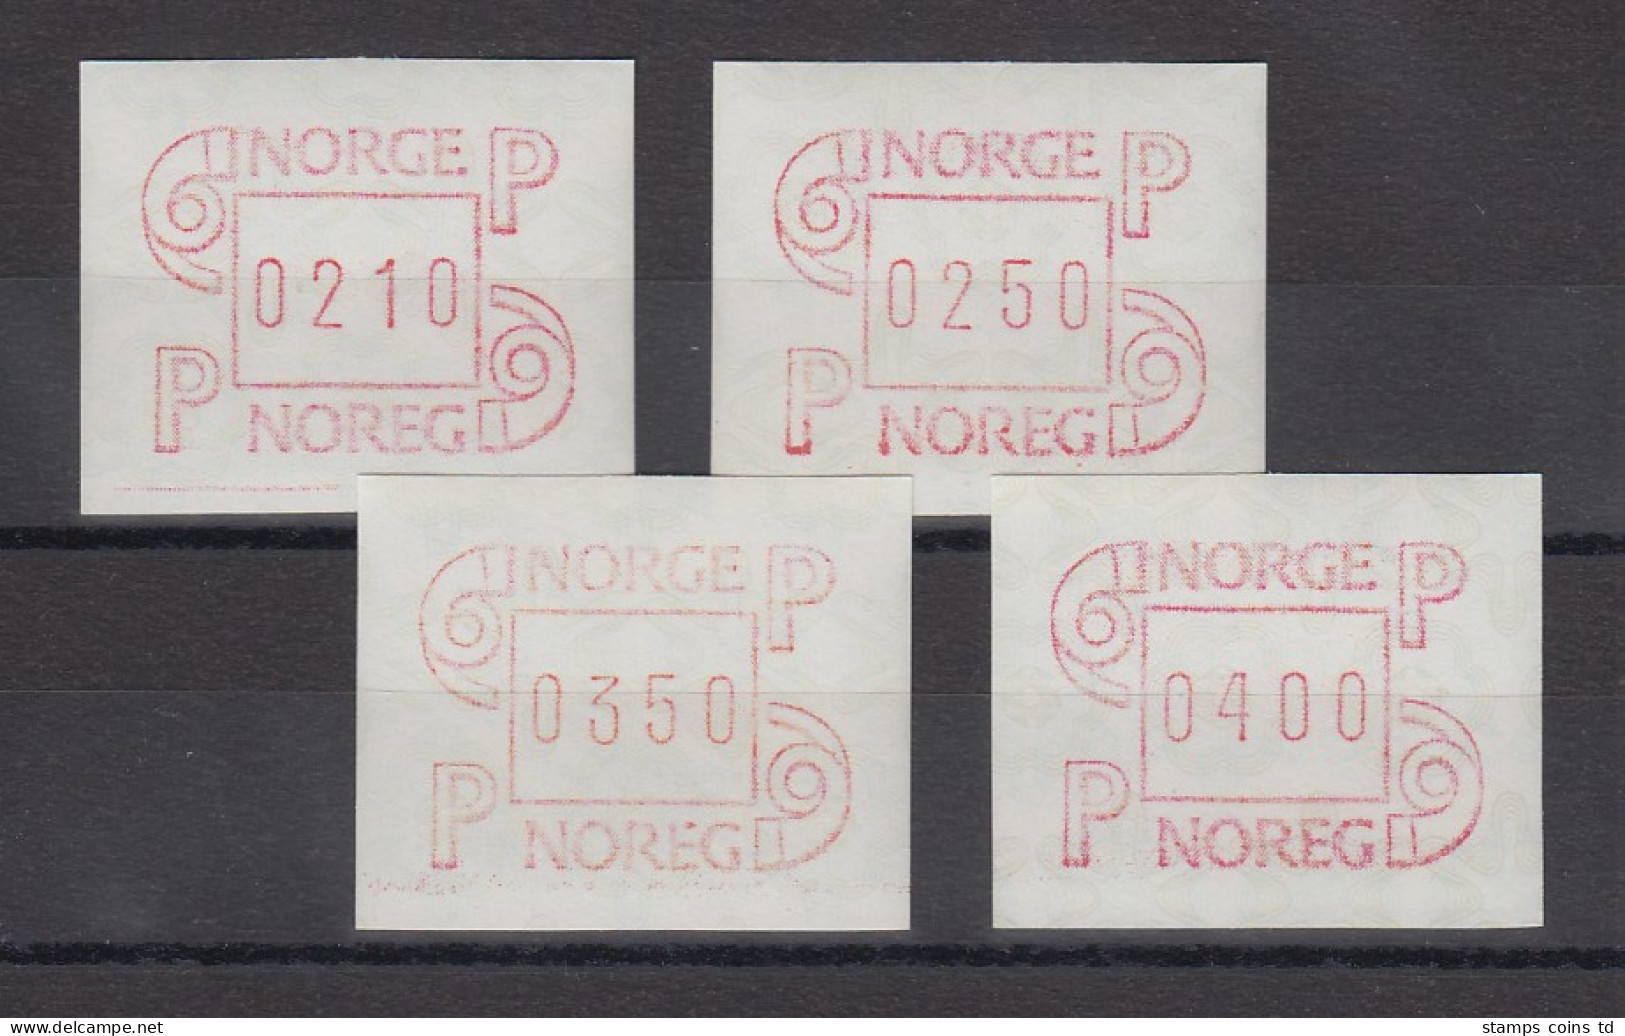 Norwegen 1986 FRAMA-ATM Mi.-Nr. 3.1b Satz 210-250-350-400 ** - Timbres De Distributeurs [ATM]